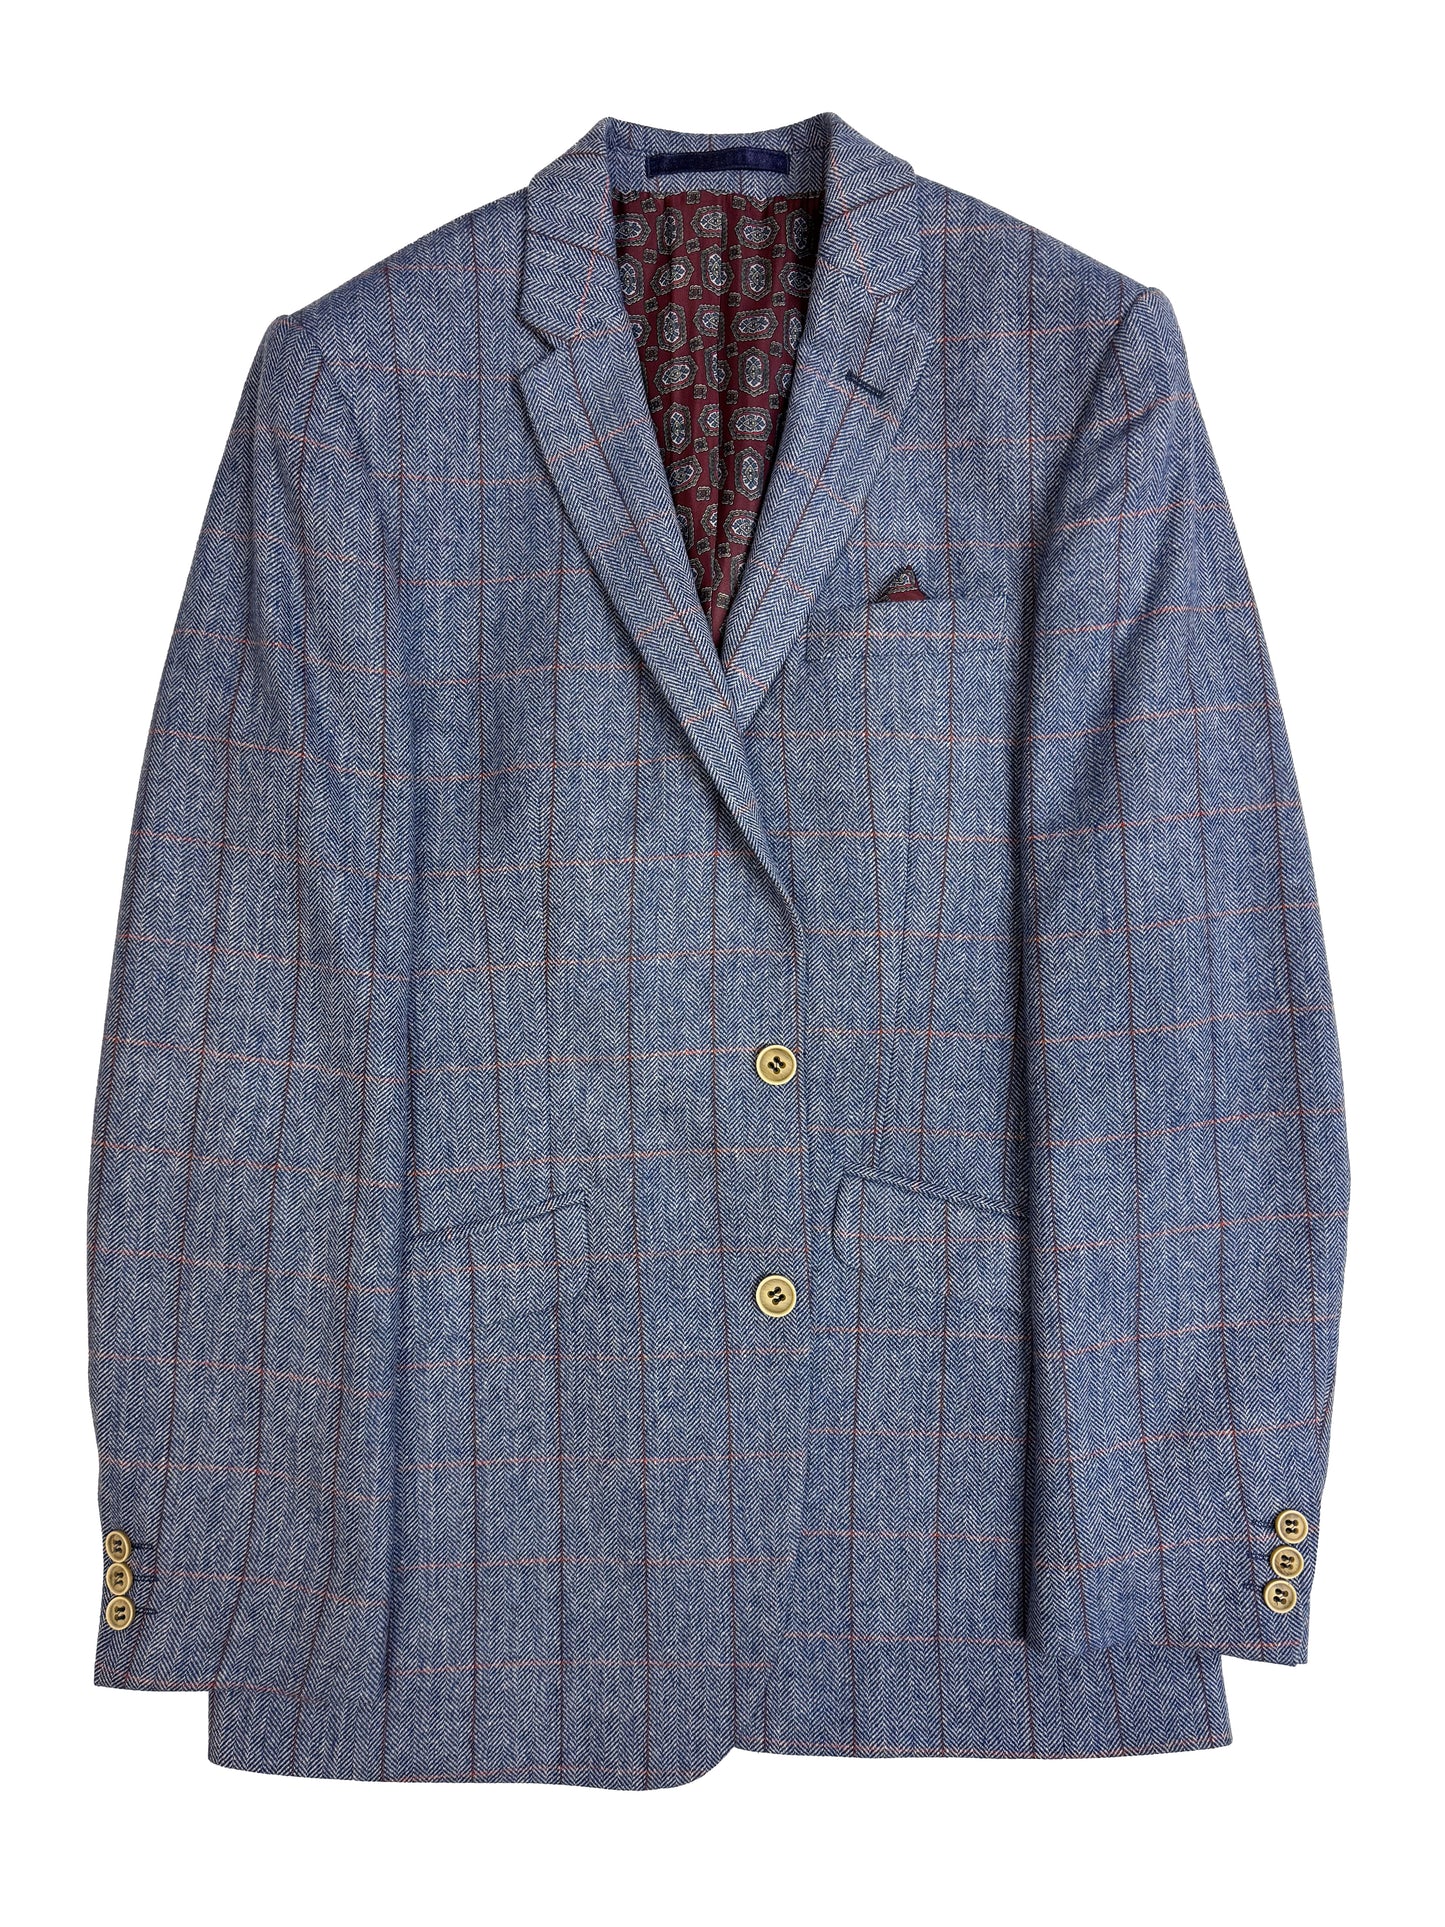 Men's Blue Tweed Wool Jacket Checked Wedding Blazer